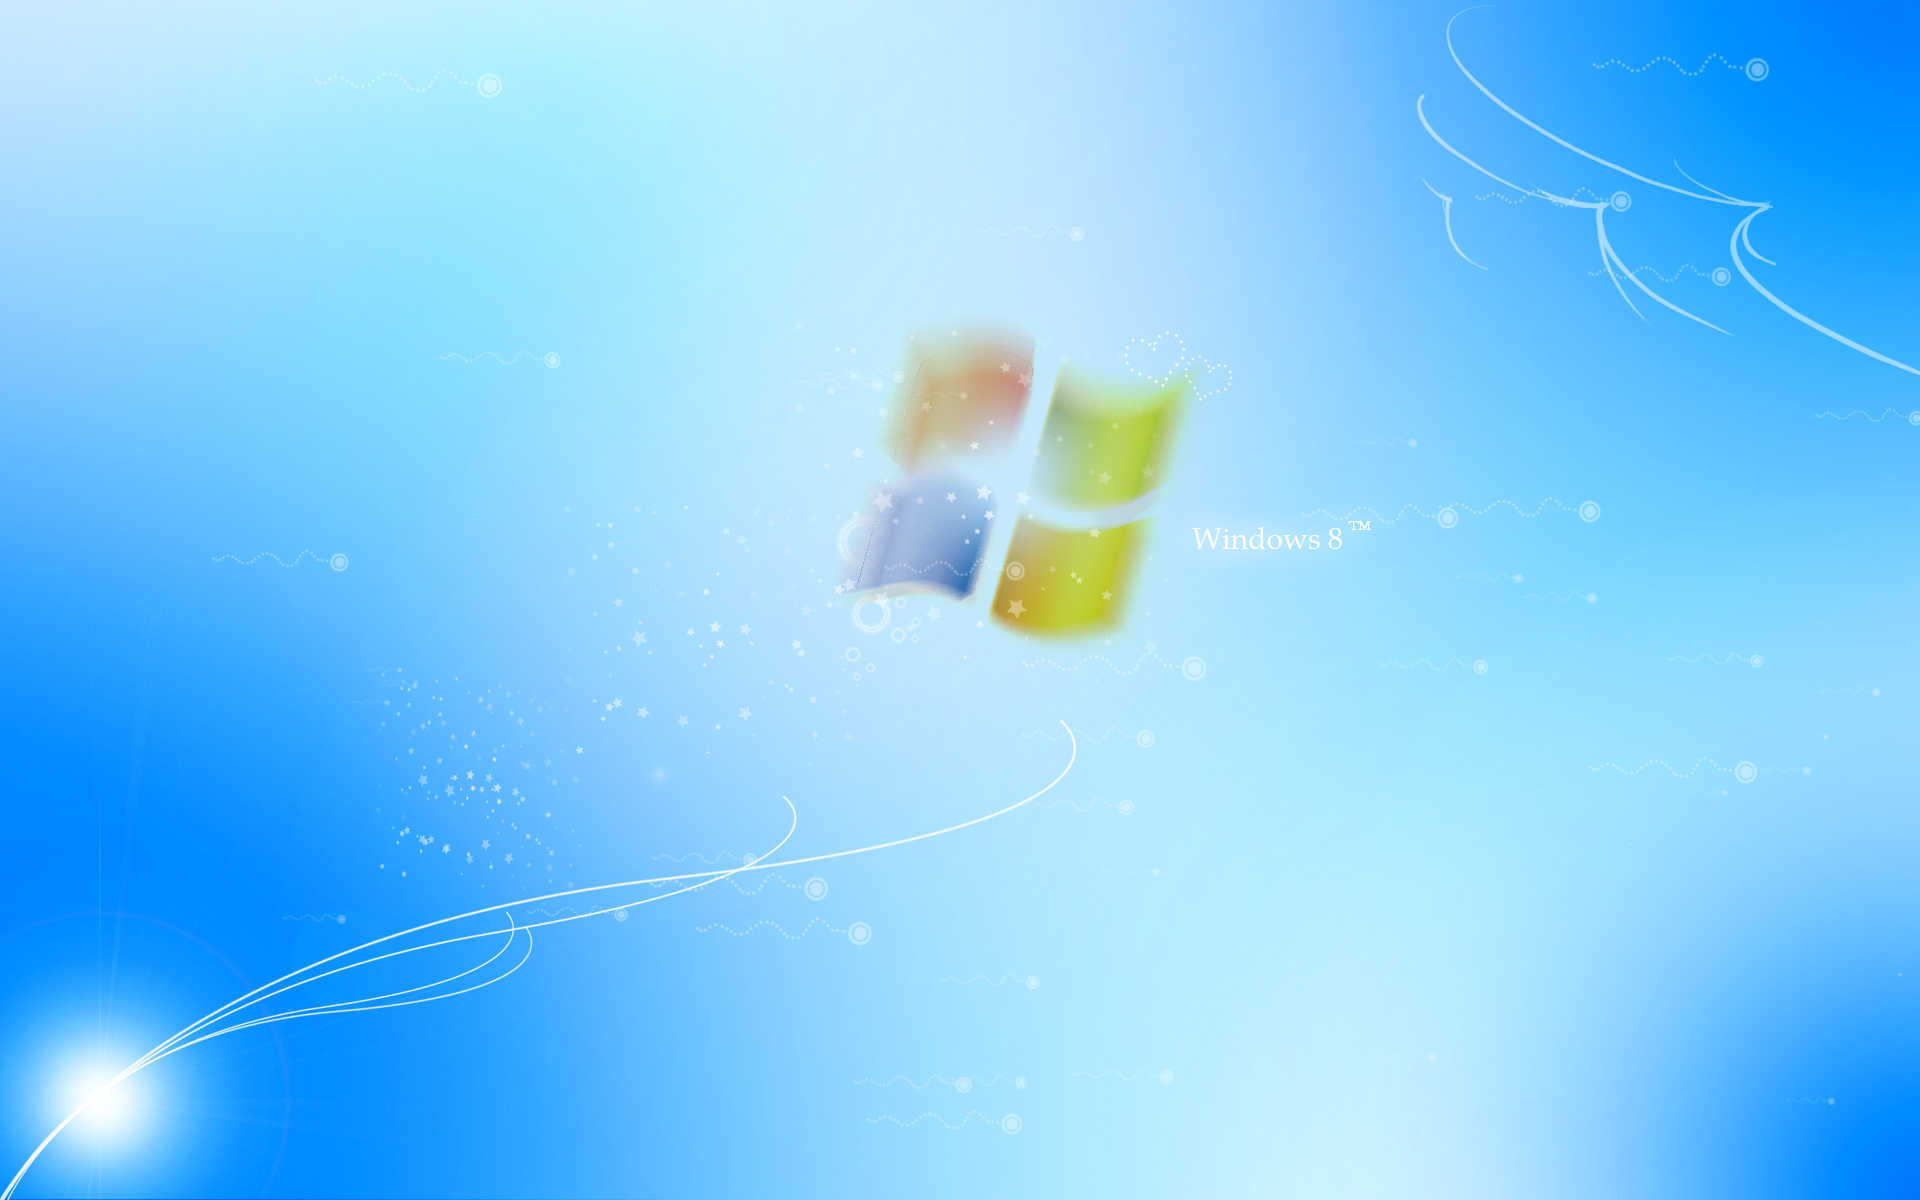 Windows 8 Windows 8 壁紙 28121647 ファンポップ